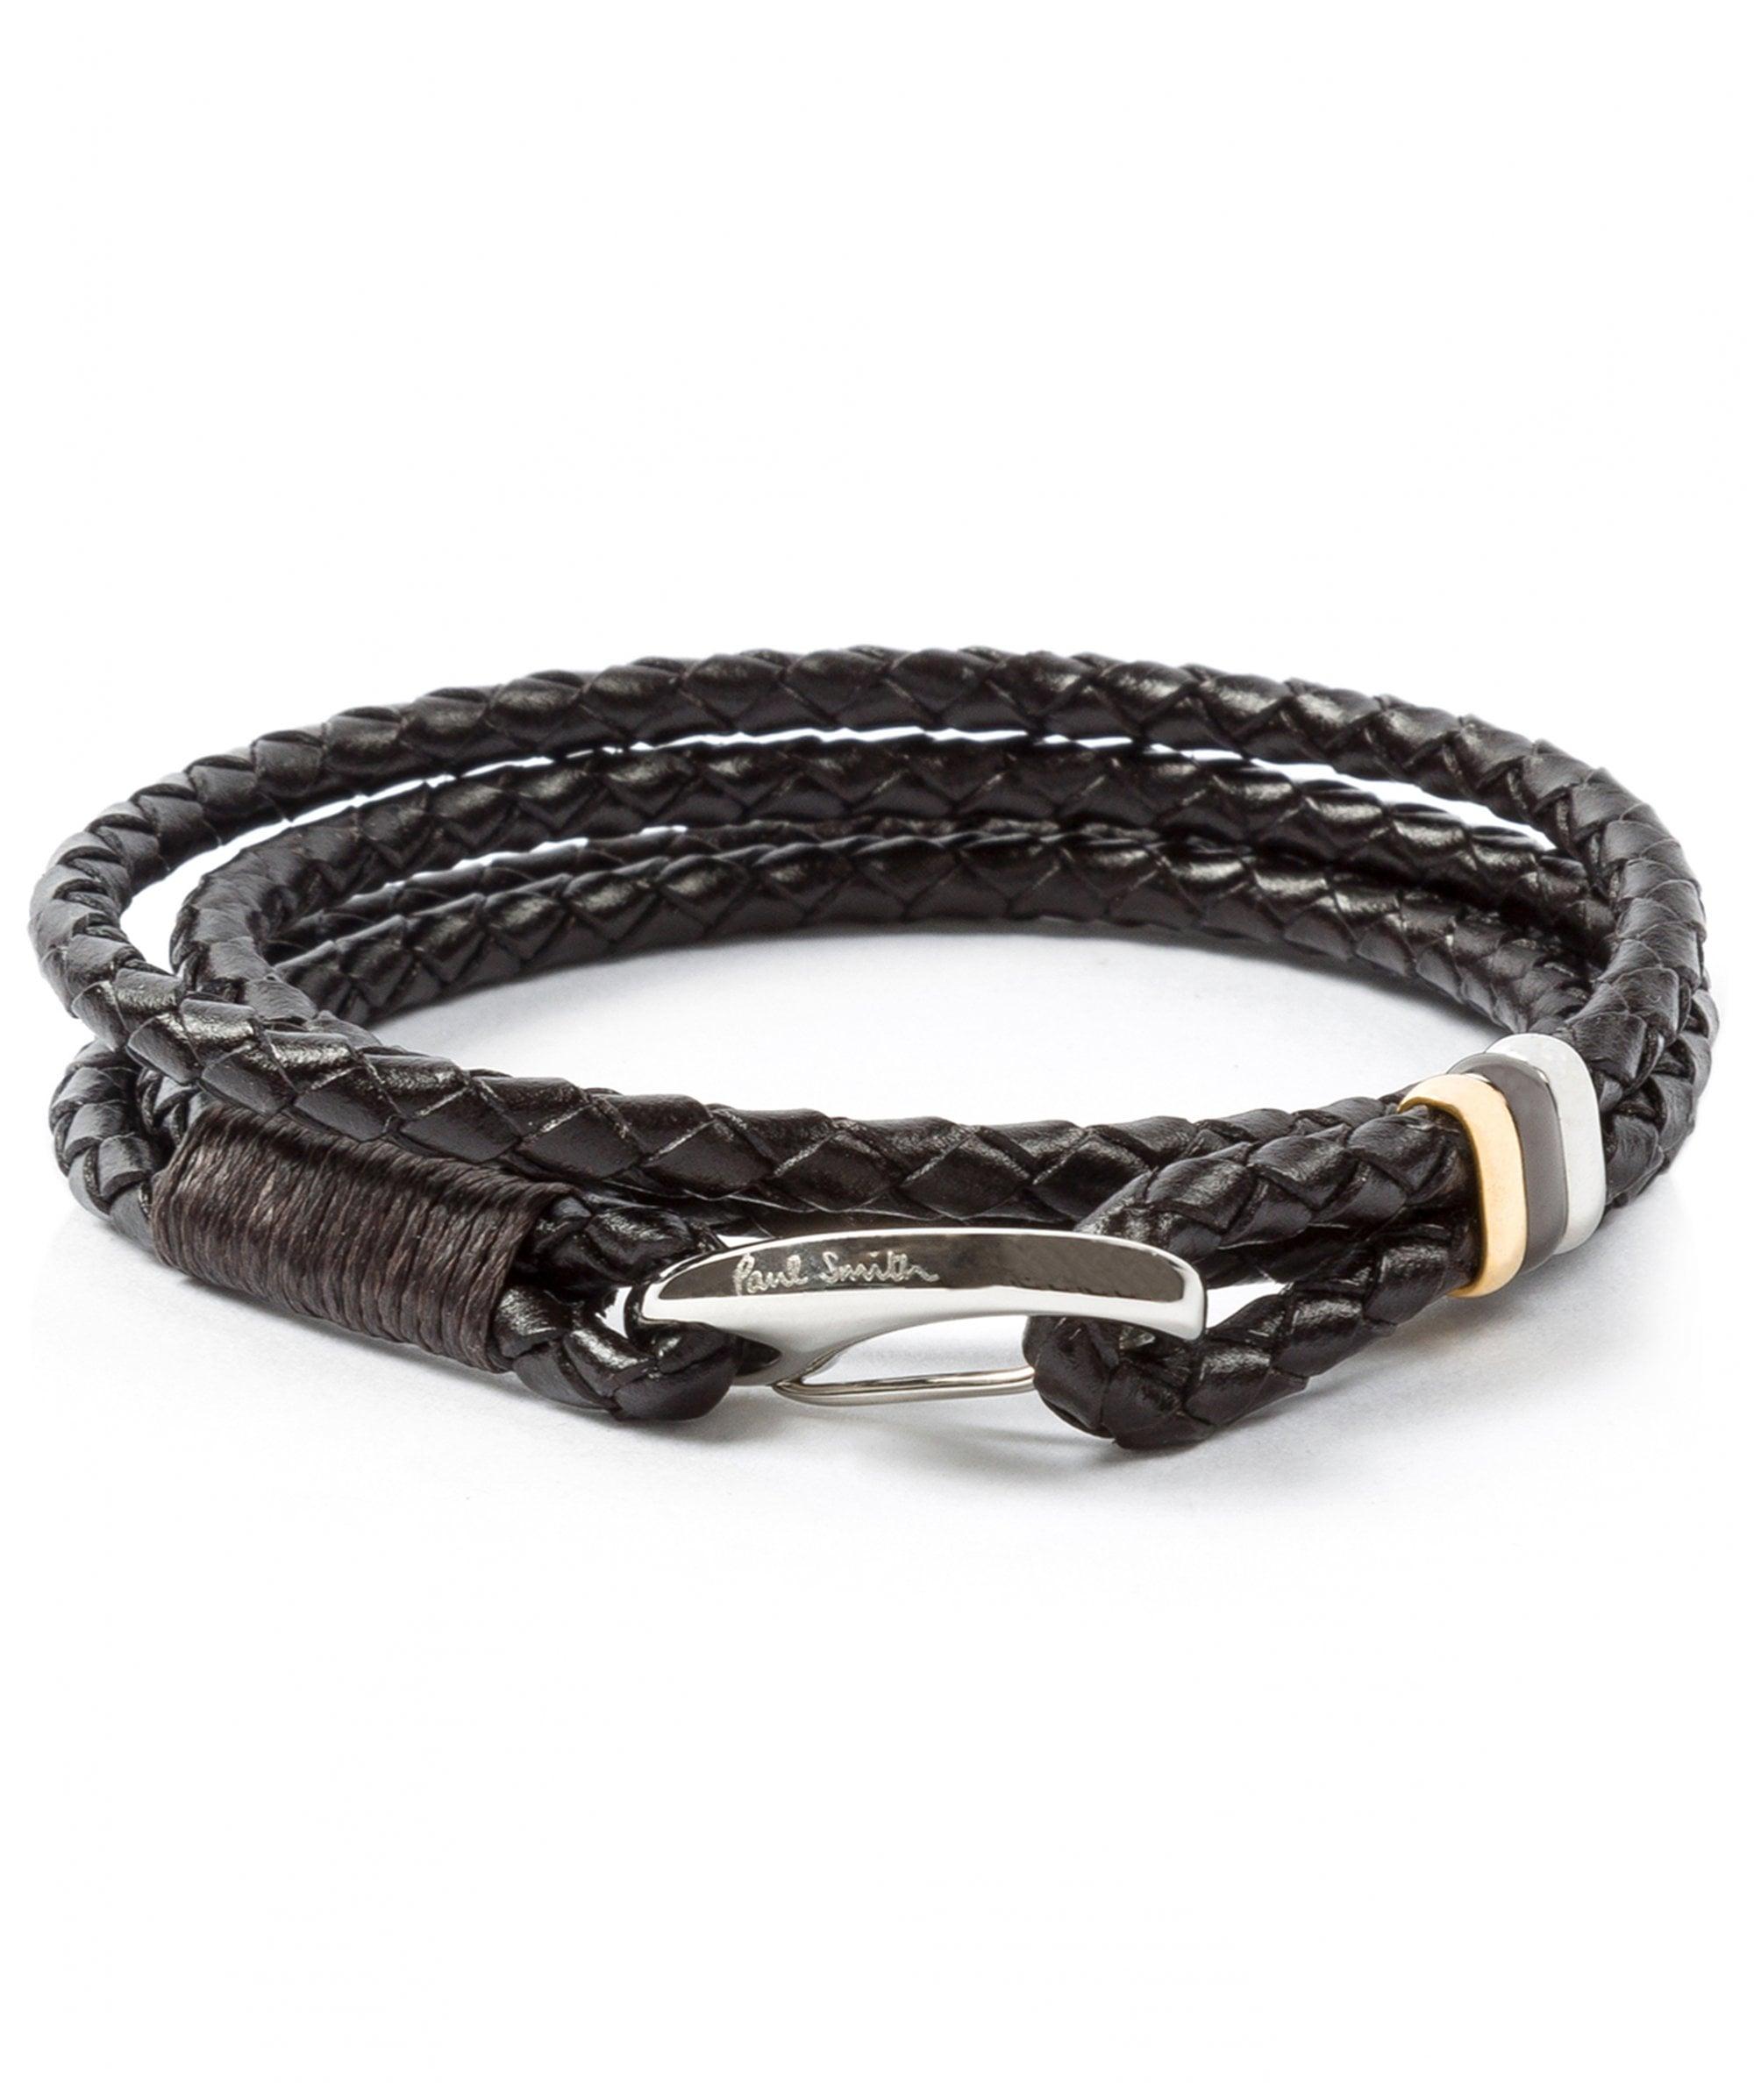 Lyst - Paul Smith Leather Wrap Bracelet in Brown for Men